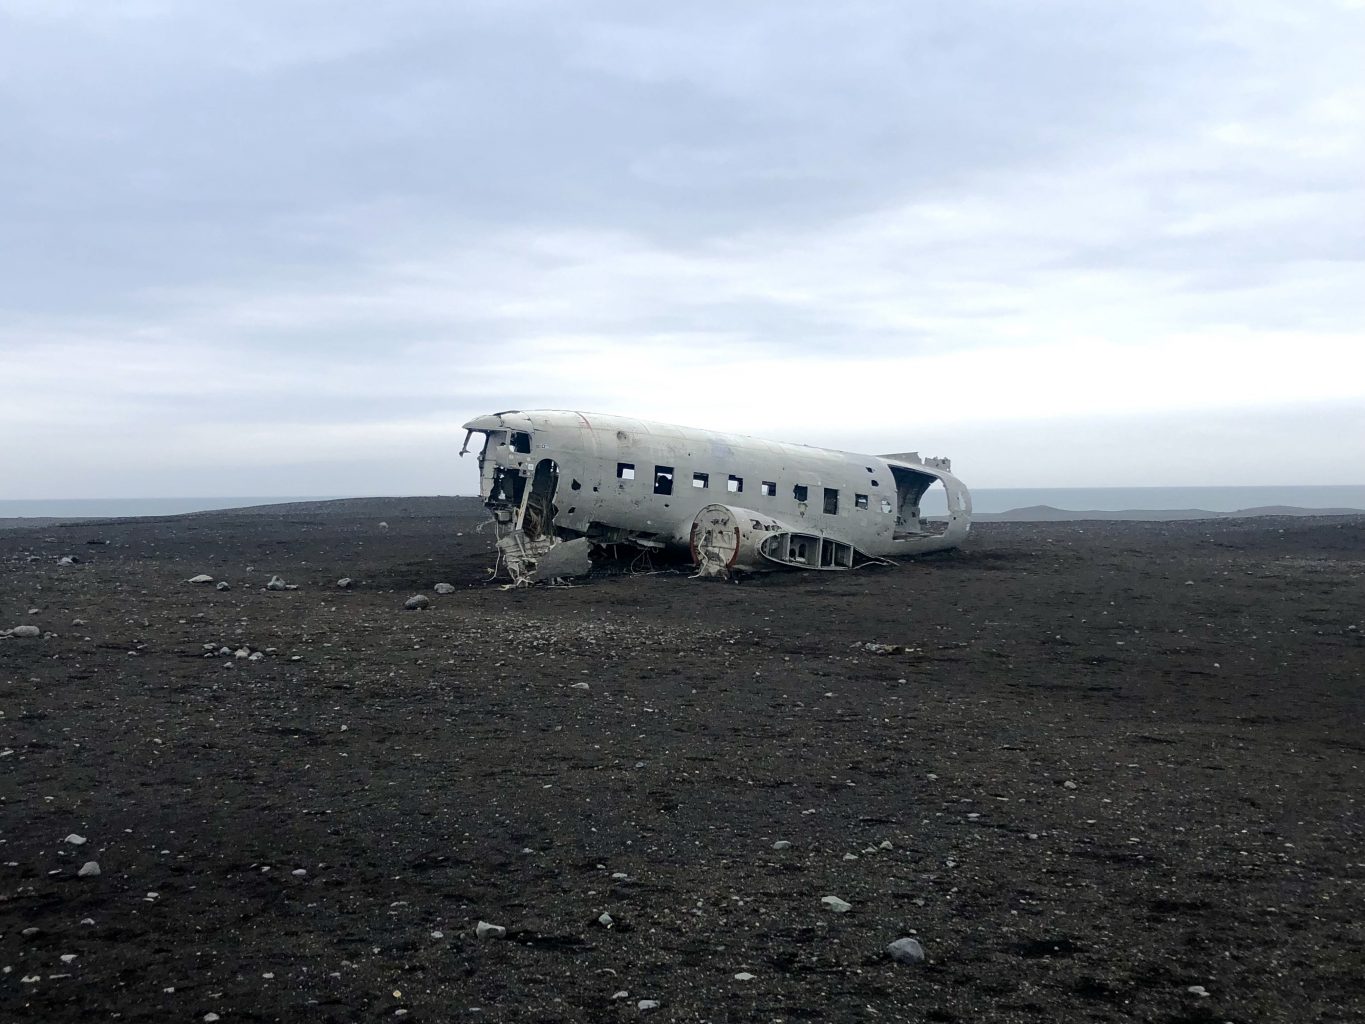 PLANE WRECK (U.S. Navy DC-3 Wreckage). Ruta de 15 días por Islandia en furgoneta camper